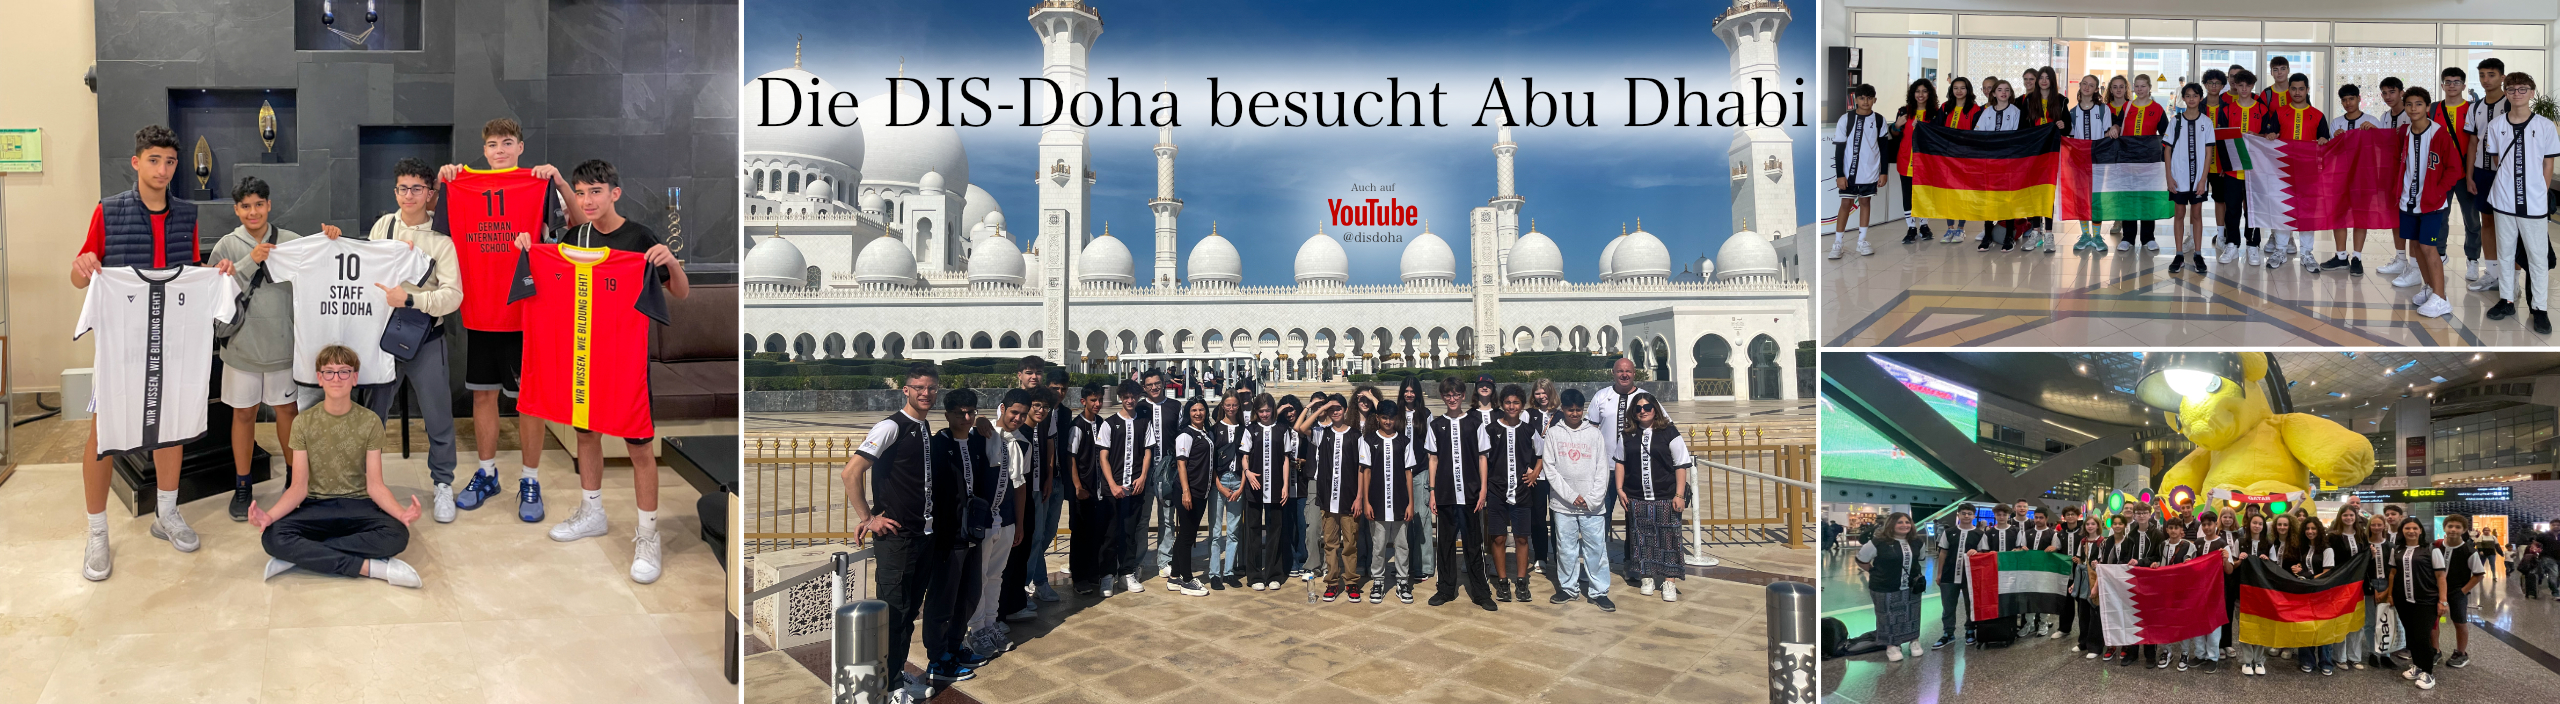 Die DIS-Doha besucht Abu Dhabi